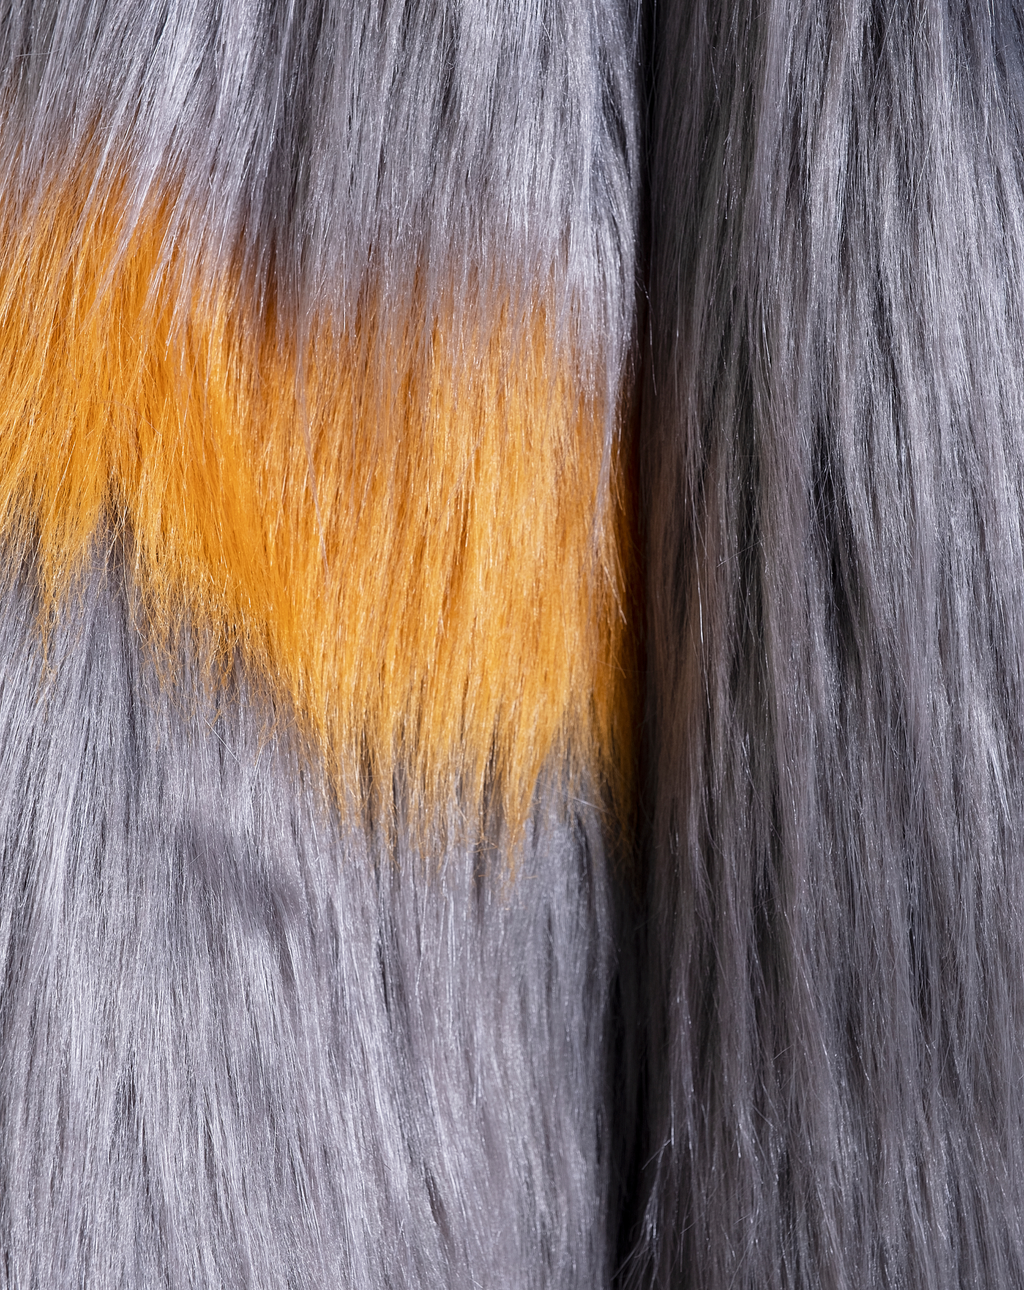 NEW OVER THE POP - Pelliccia Oversize in faux fur grigio